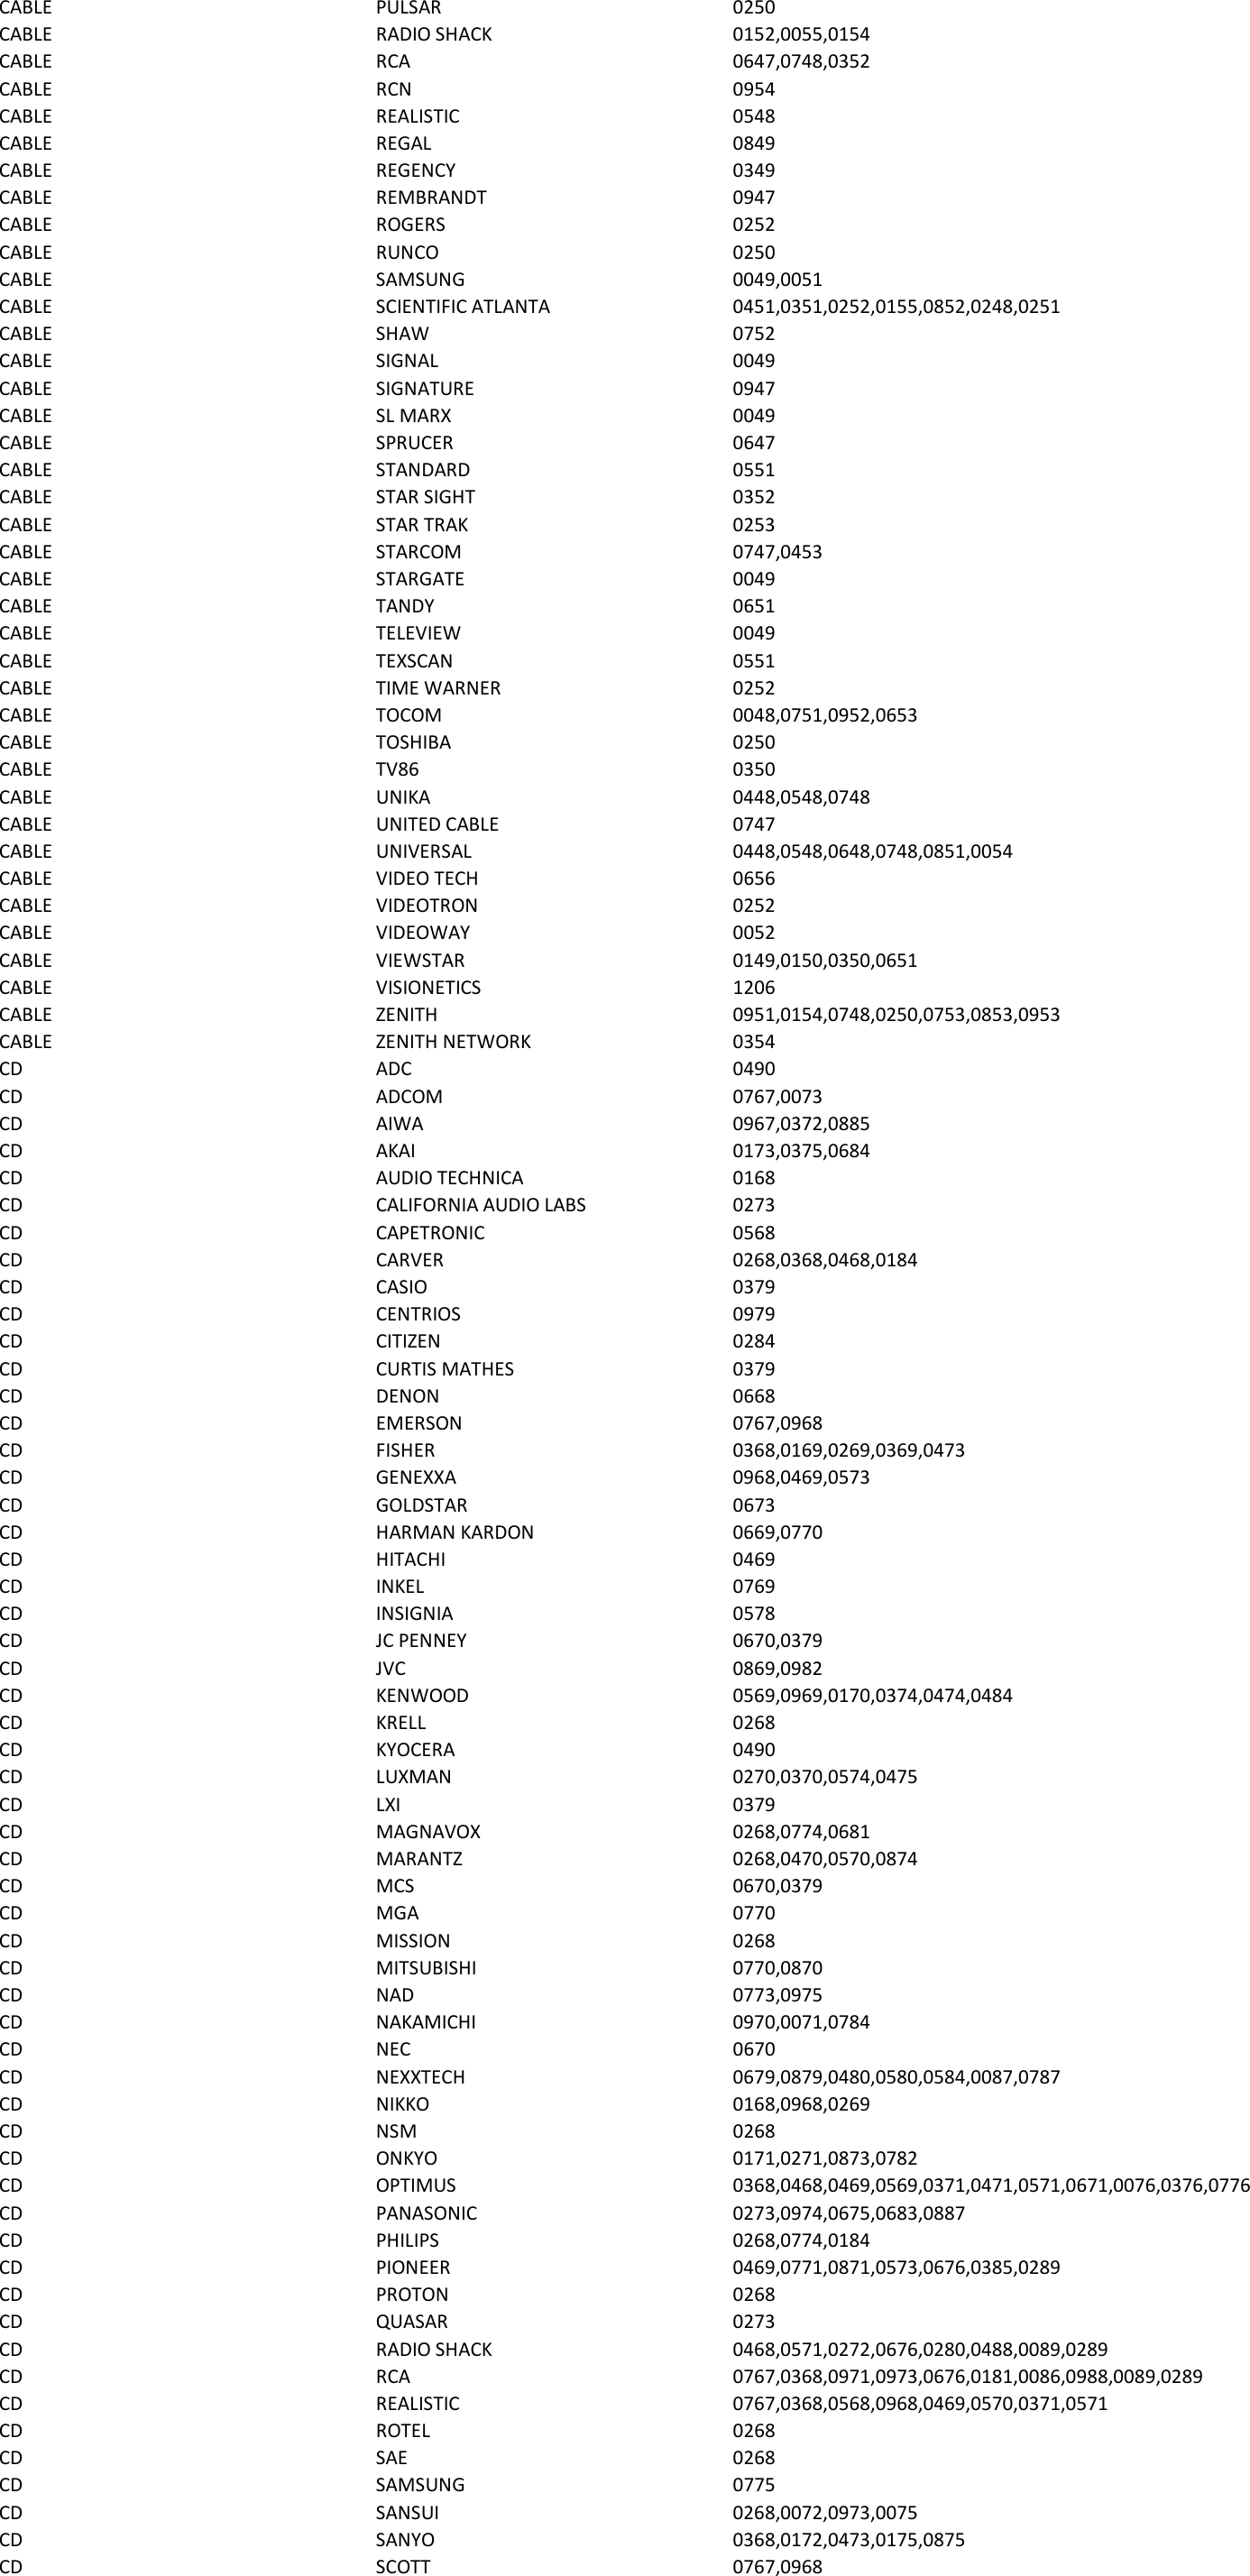 Page 2 of 11 - Philips  Codes For SRU3003 And SRU3003WM 17 Iim Brp